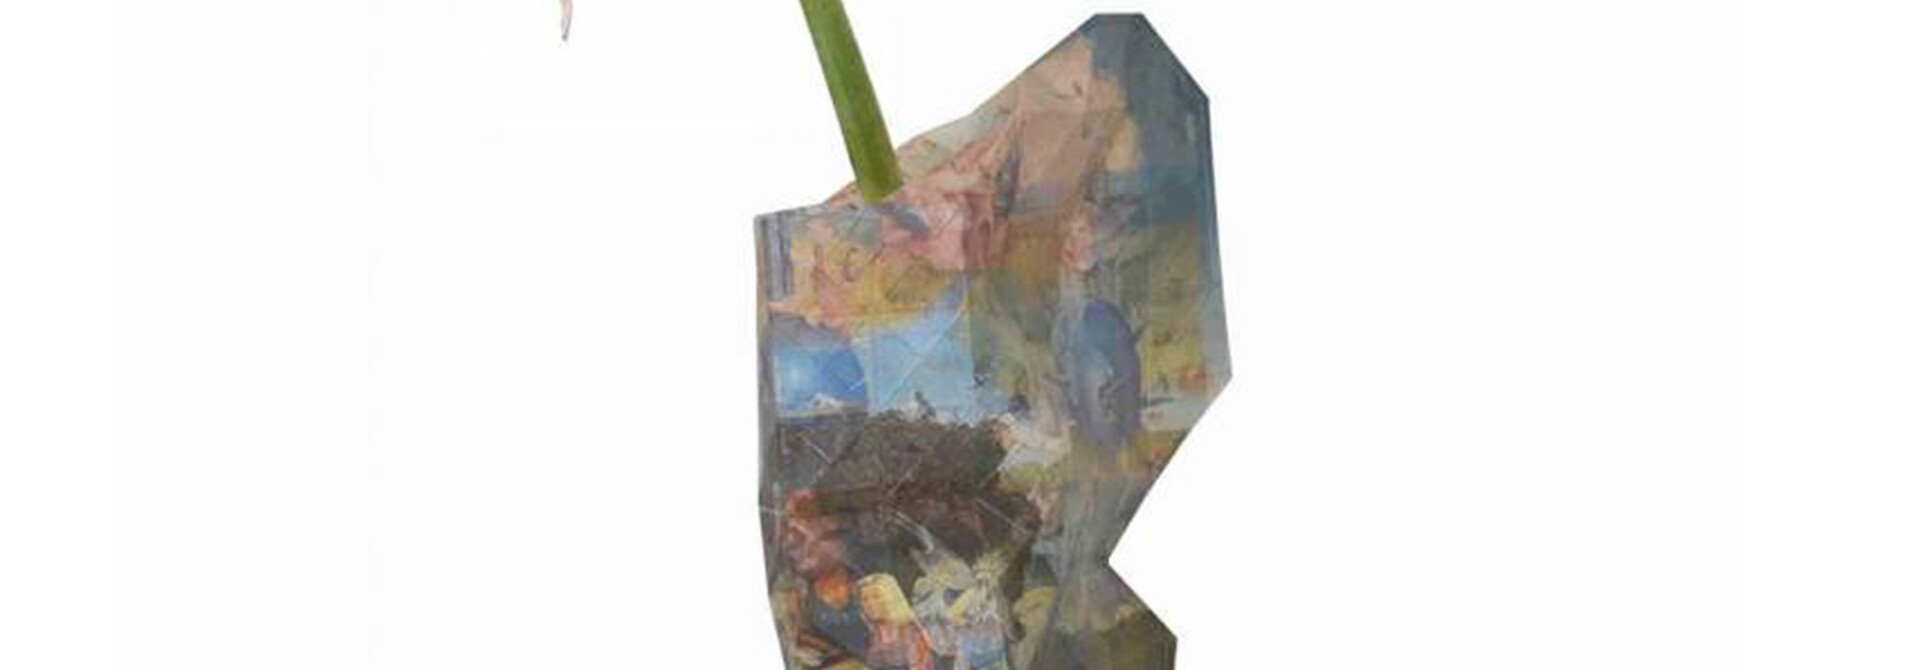 Paper Vase Cover Jheronimus Bosch